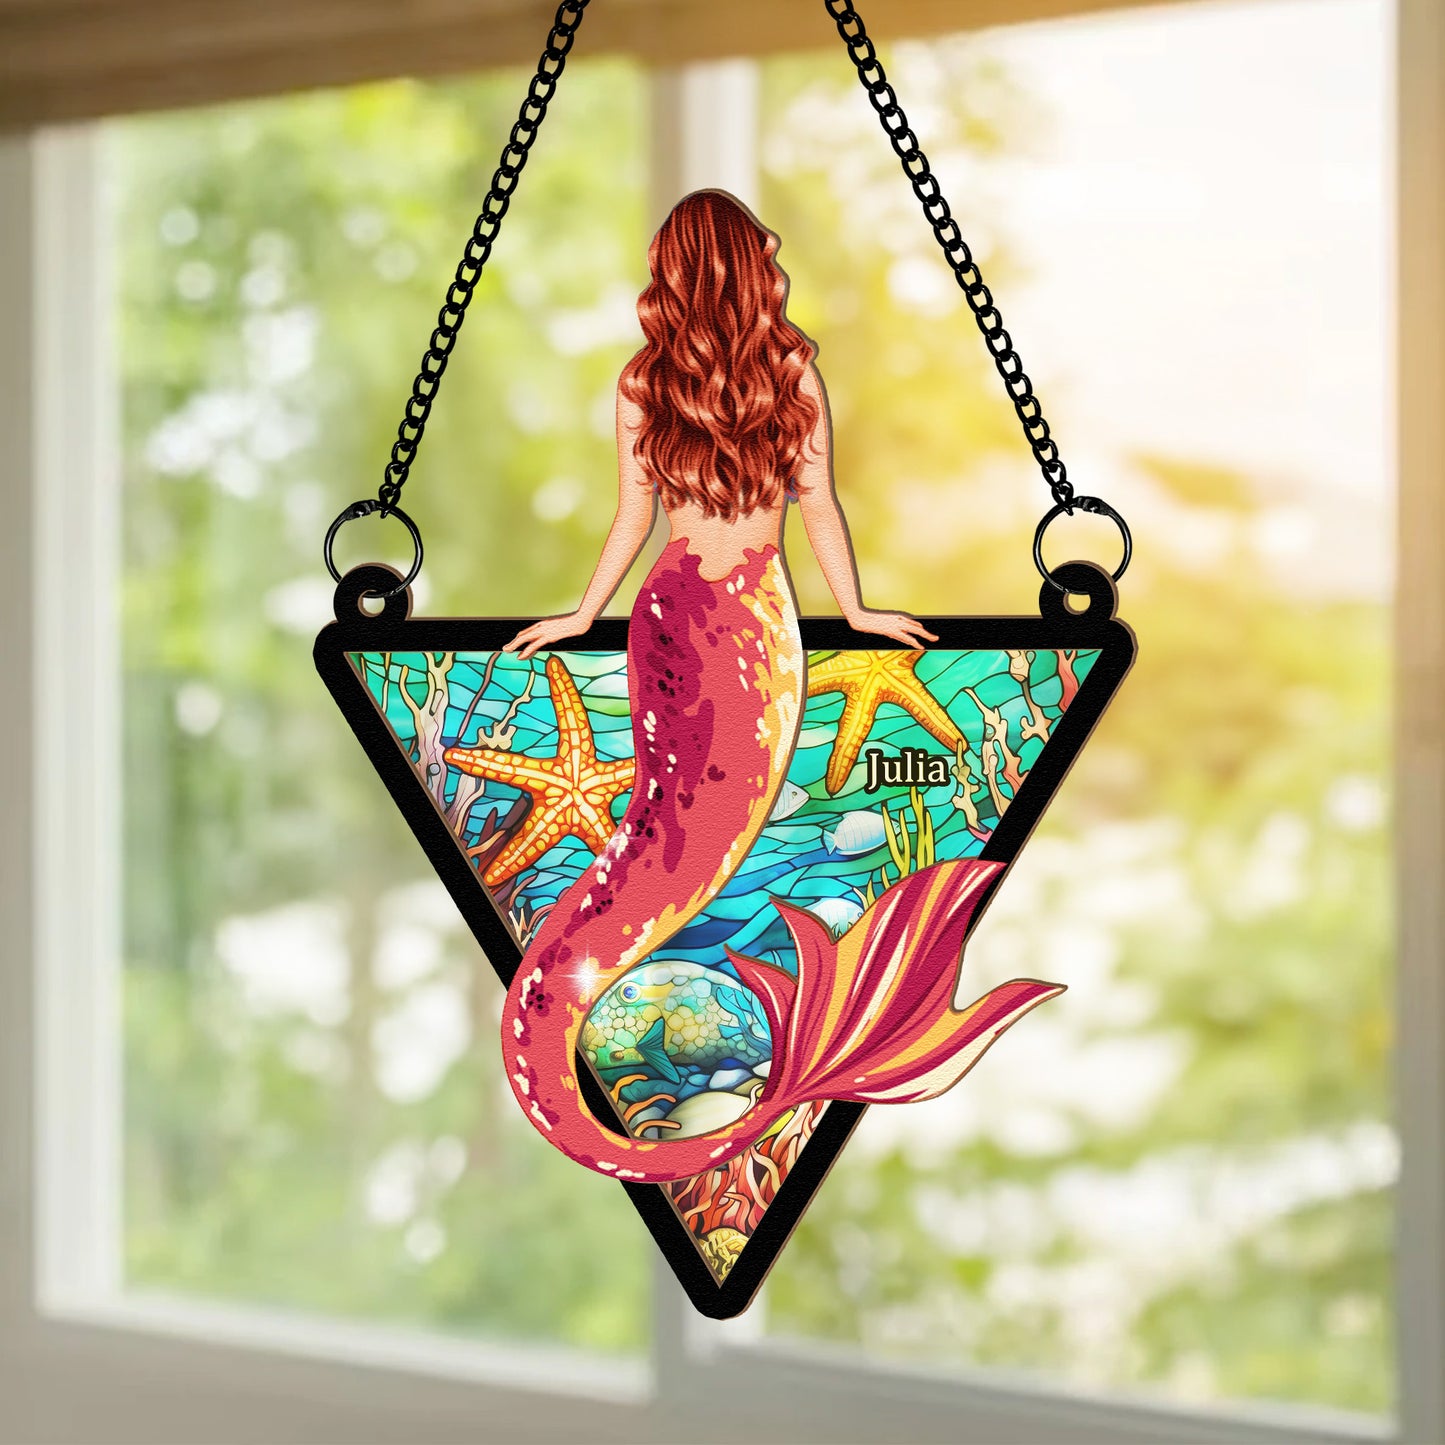 Mermaid Girl - Personalized Window Hanging Suncatcher Ornament